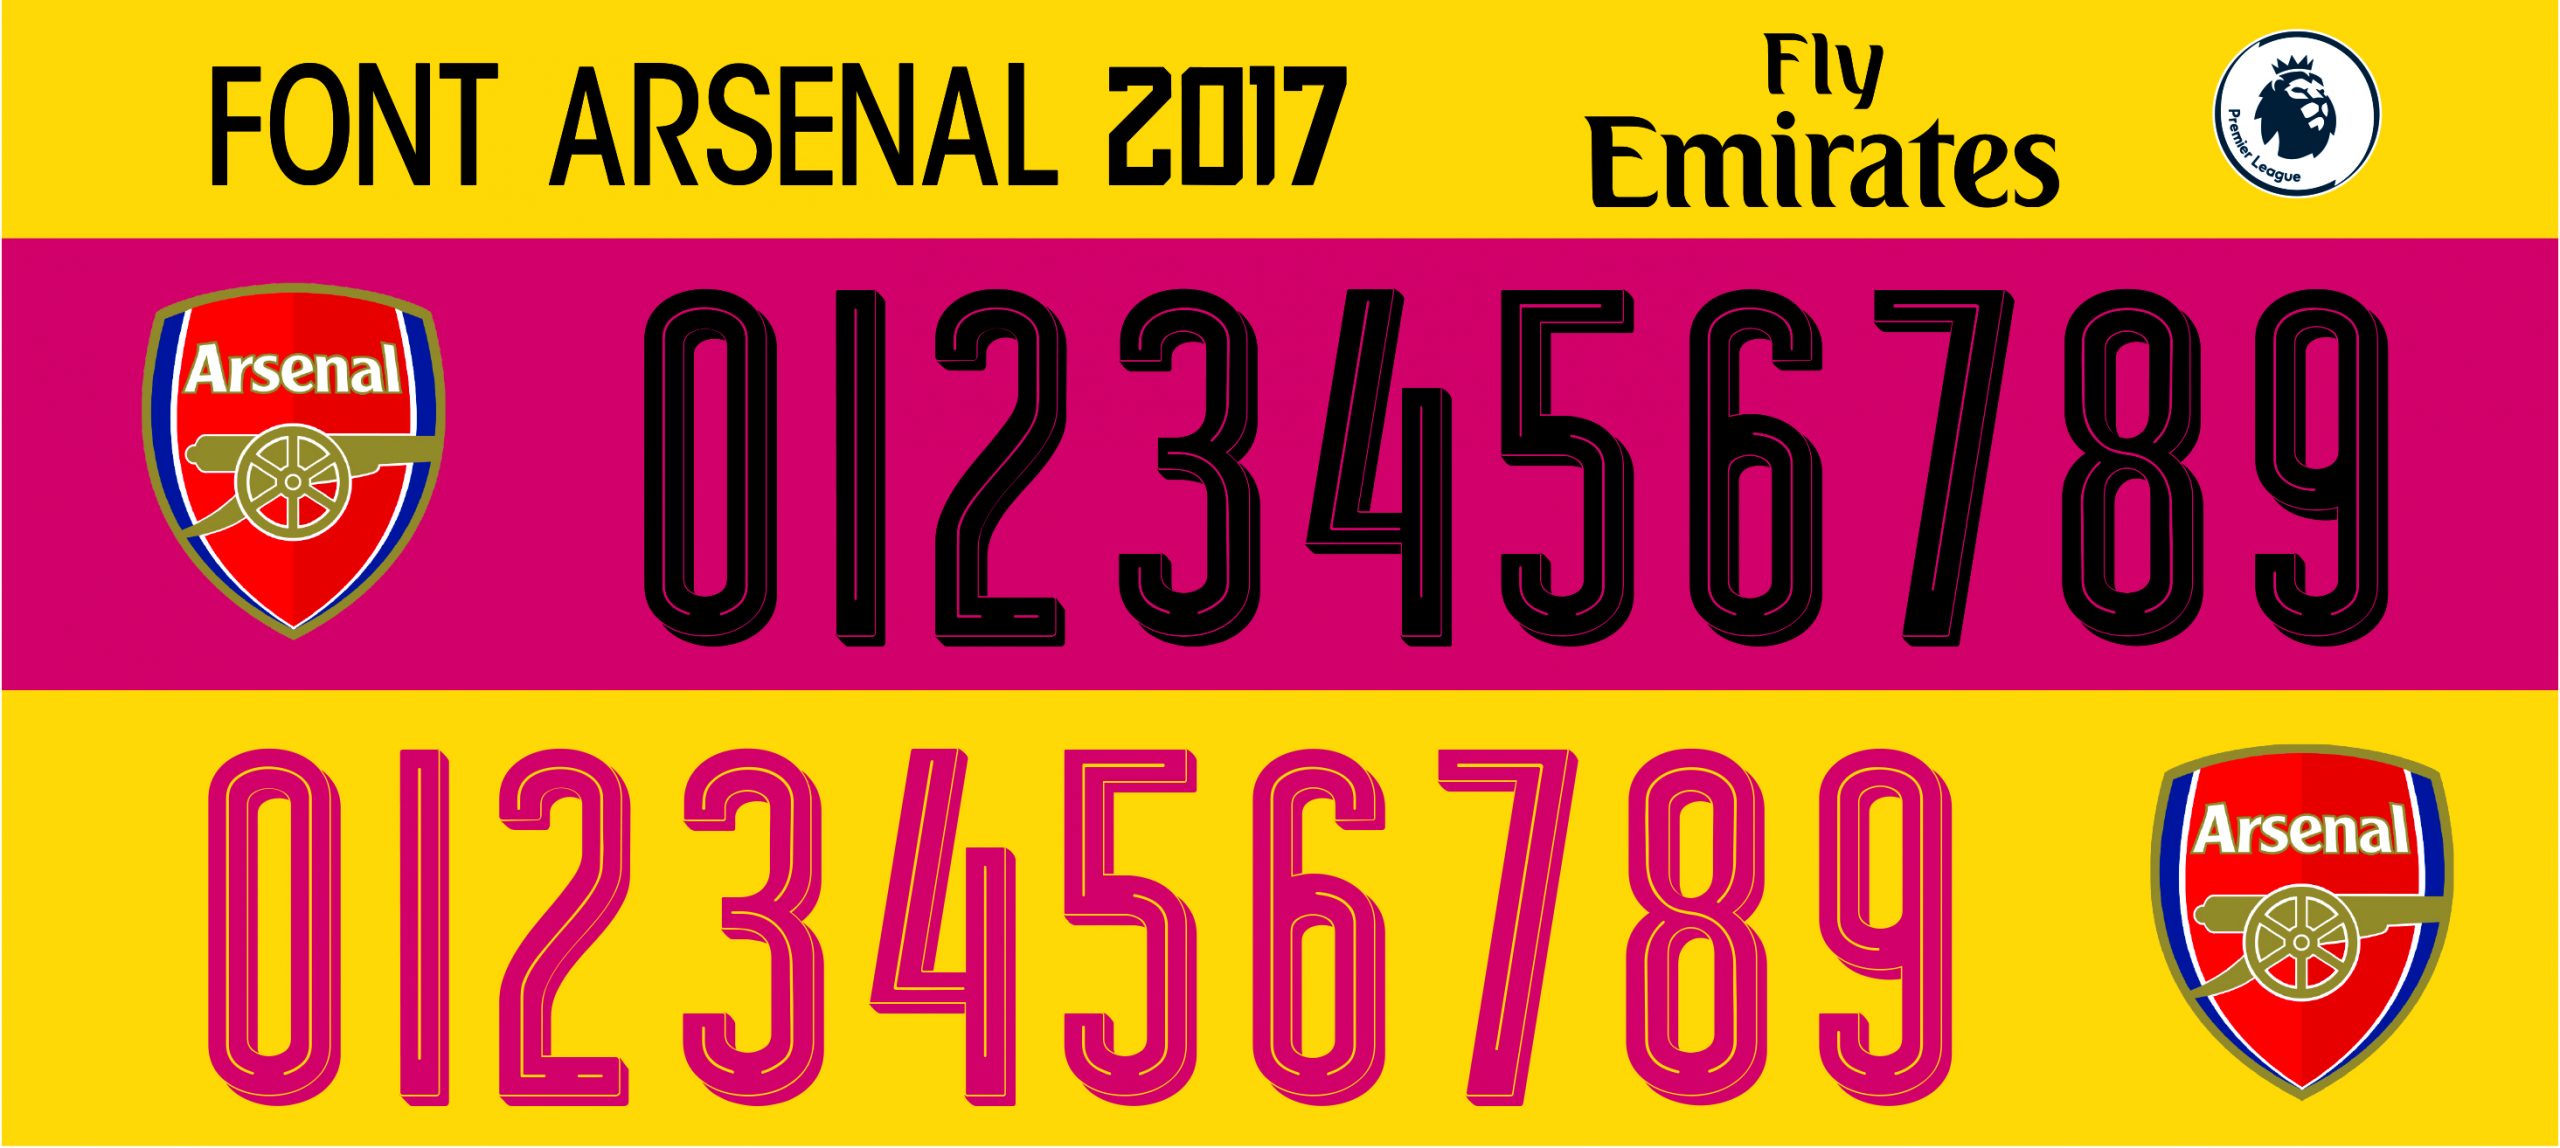 Font Arsenal 2017